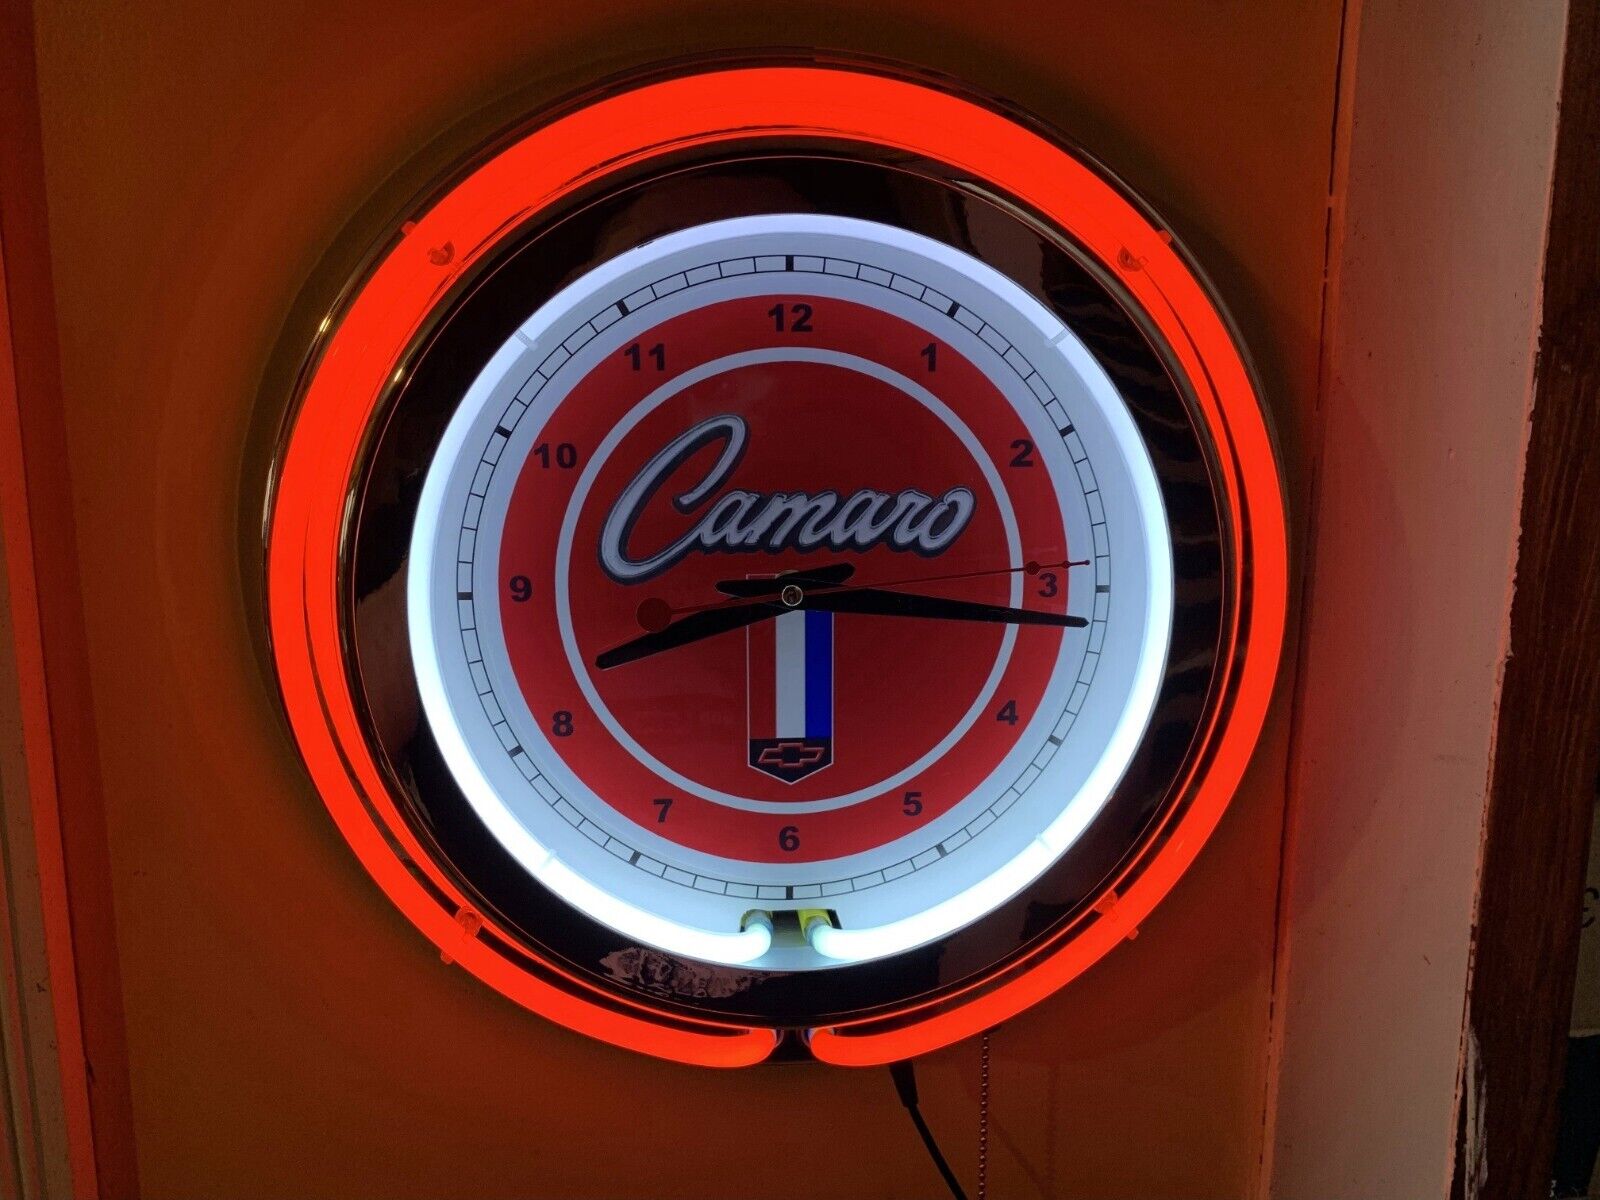 Camaro Motors Auto Garage RED Man Cave Neon Wall Clock Advertising Sign